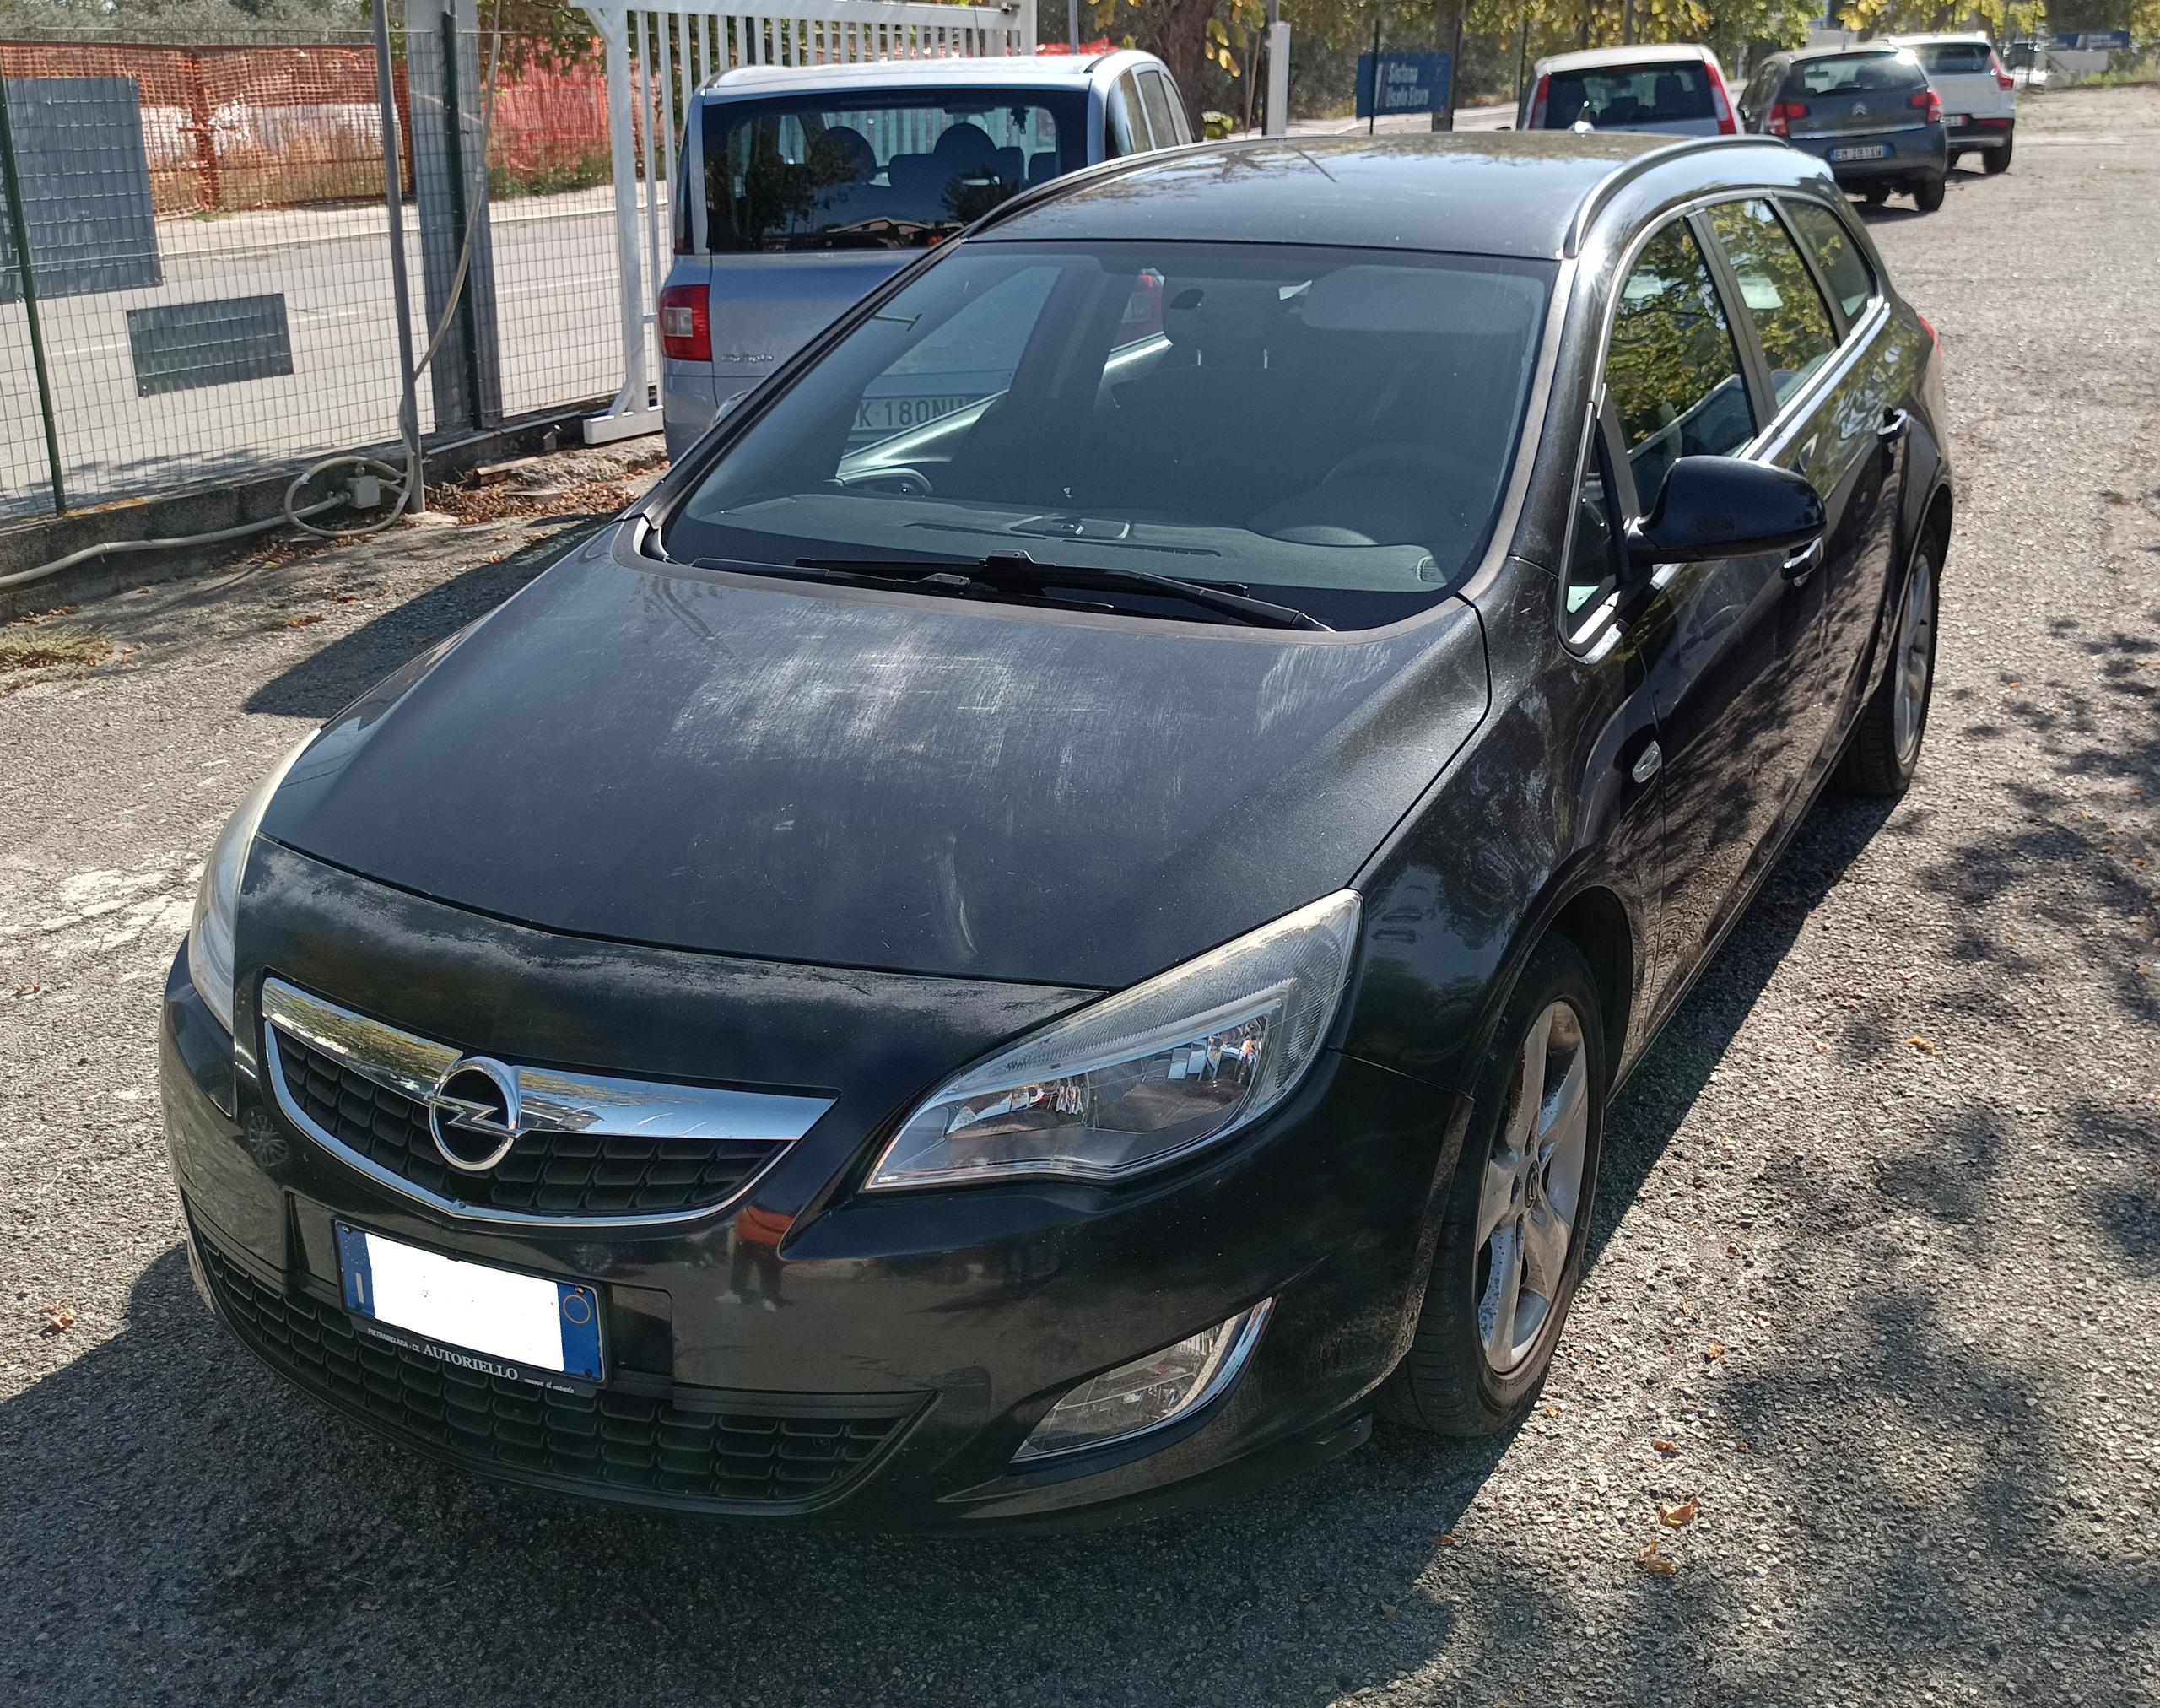 <img src=“Opel. jpg” alt=“Opel astra 1.7 cdti 125cv sports tourer cosmo”>